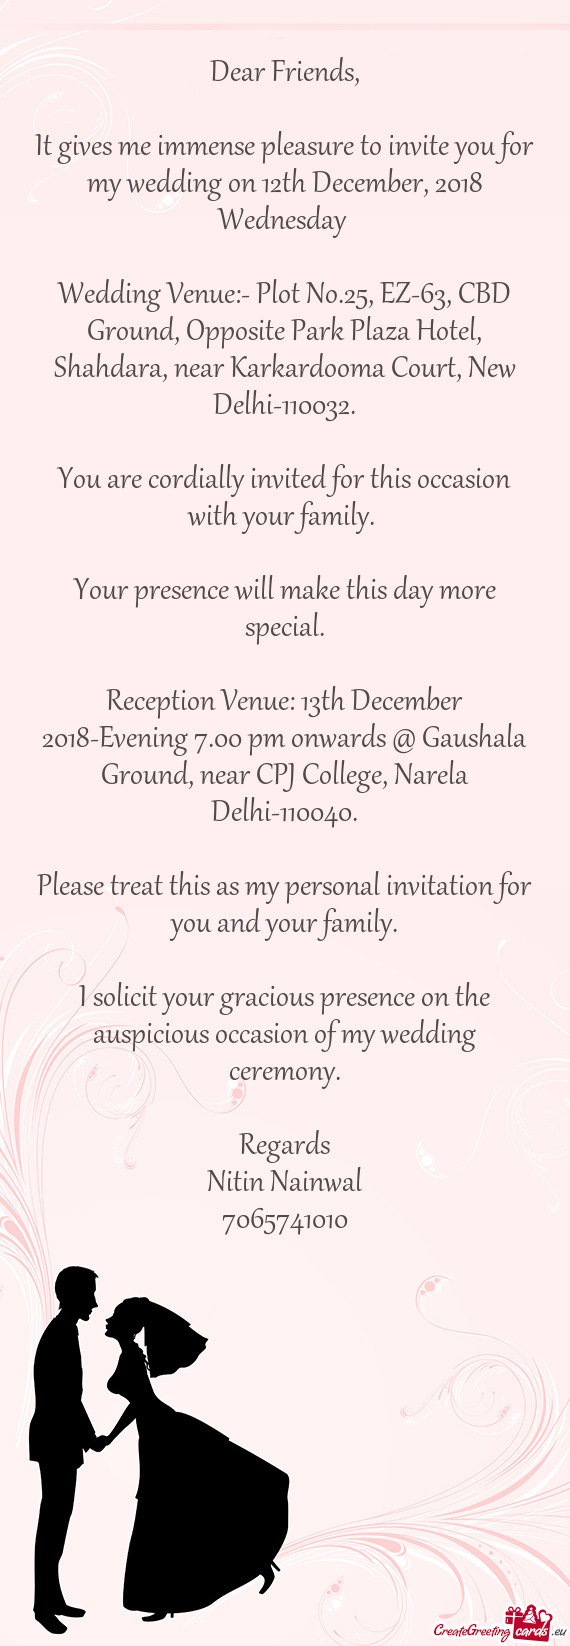 Wedding Venue:- Plot No.25, EZ-63, CBD Ground, Opposite Park Plaza Hotel, Shahdara, near Karkardooma